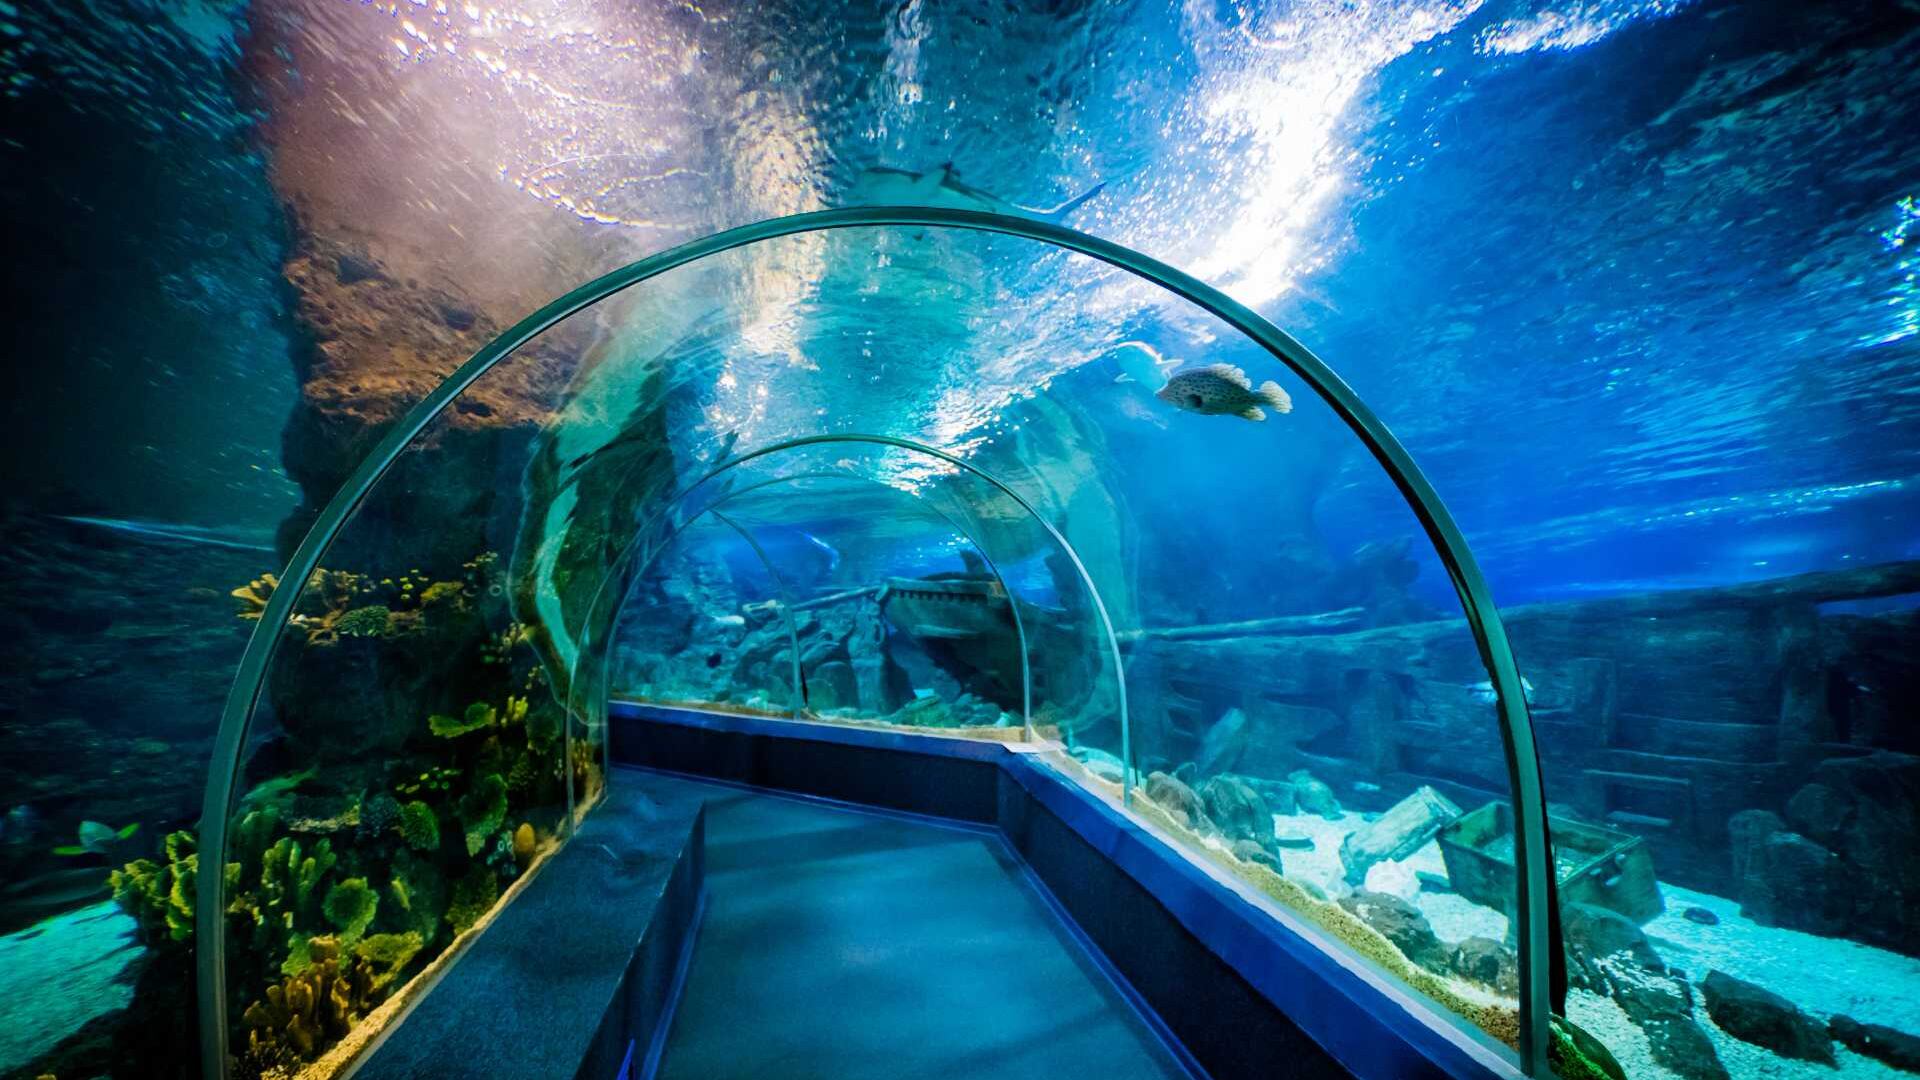 A view of a glass tunnel through the aquarium at Resorts World, Sentosa, Singapore.